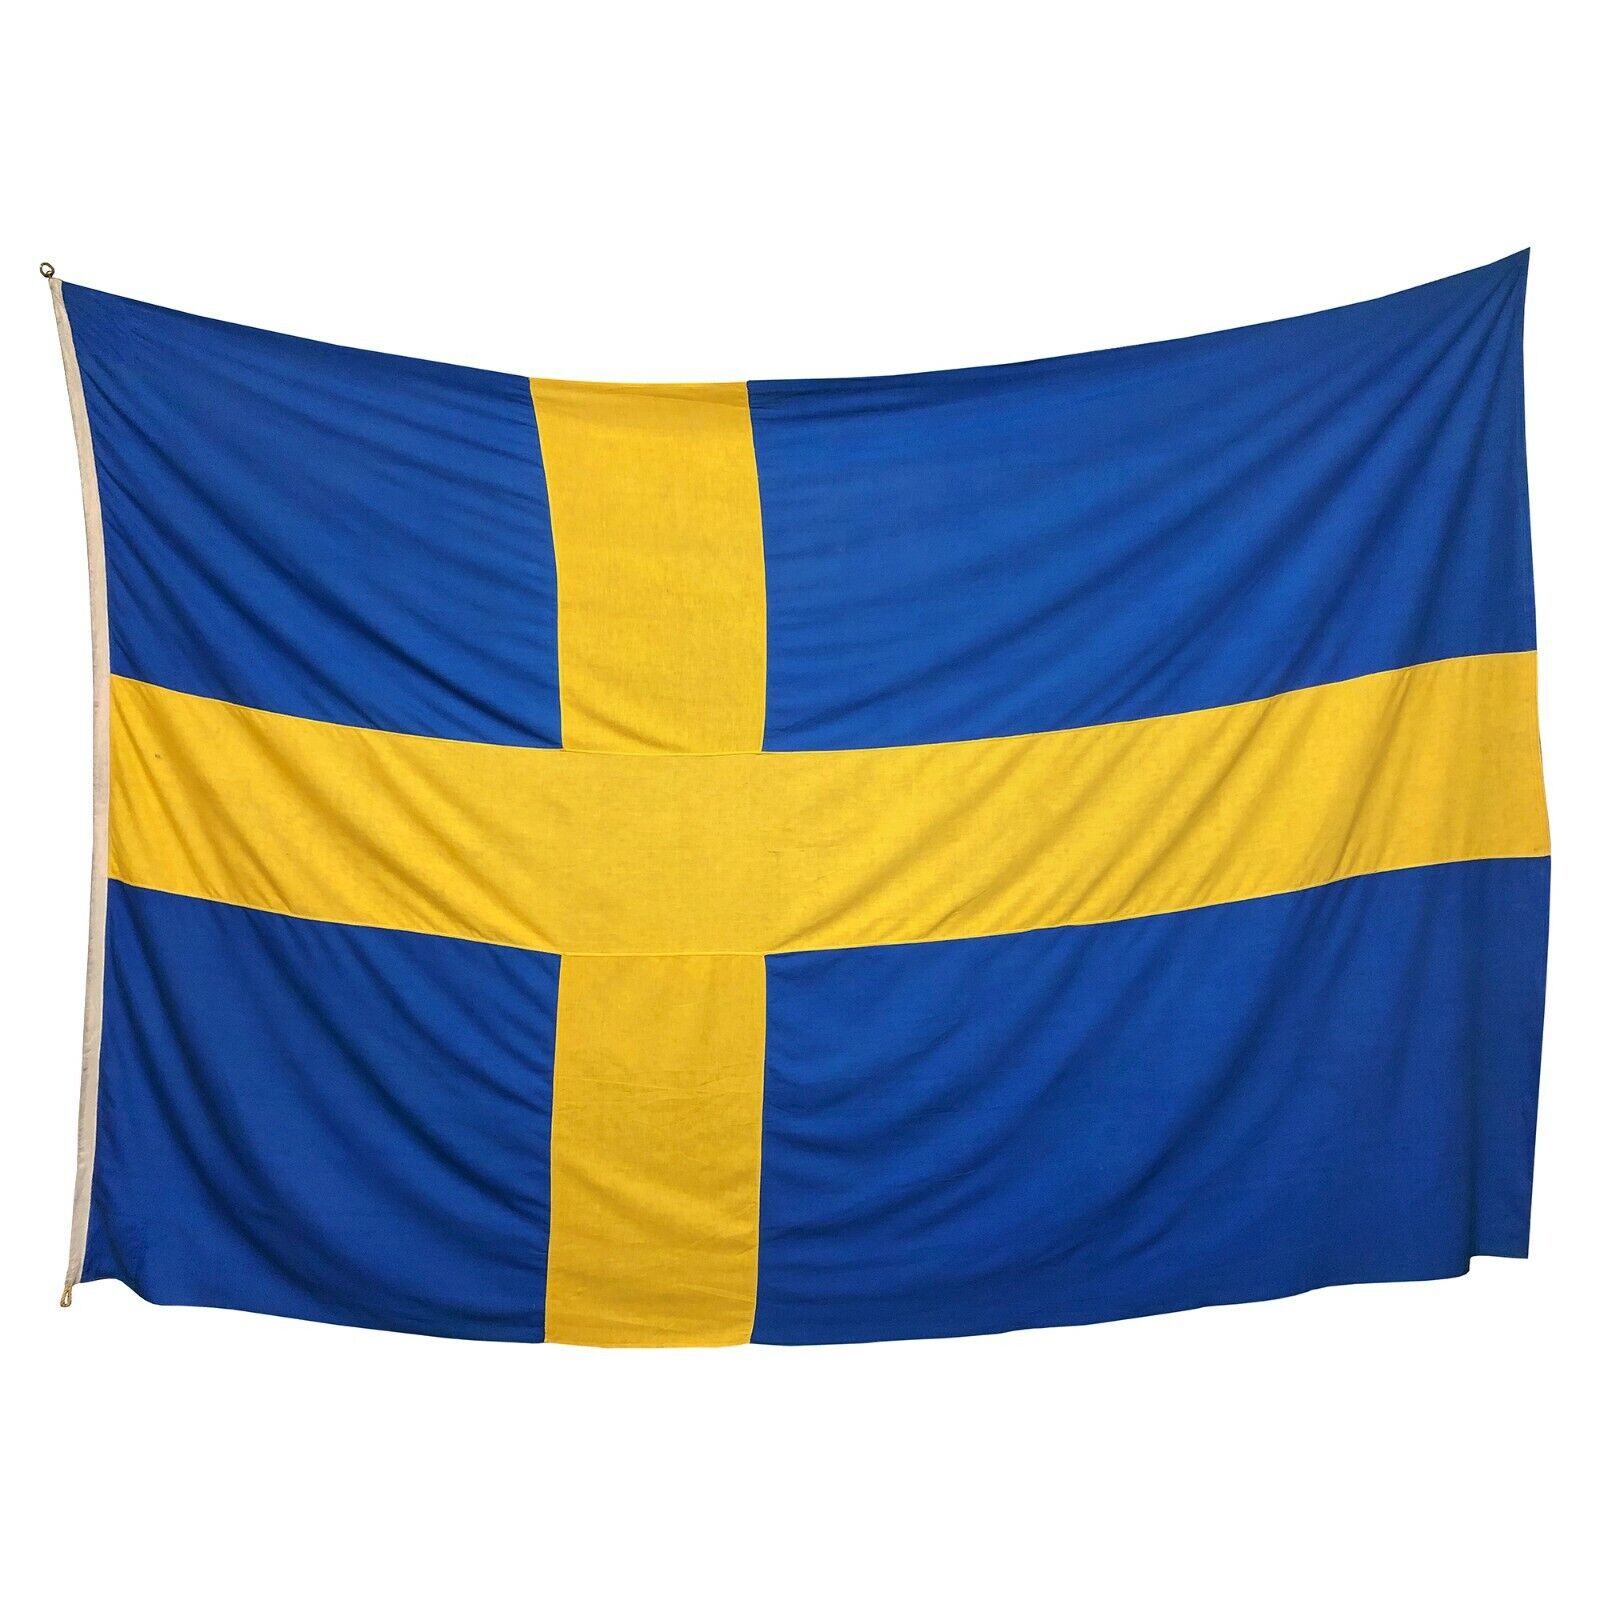 XL Vintage Cotton Swedish Flag Sewn Cloth Old Scandinavia Sweden Textile Art